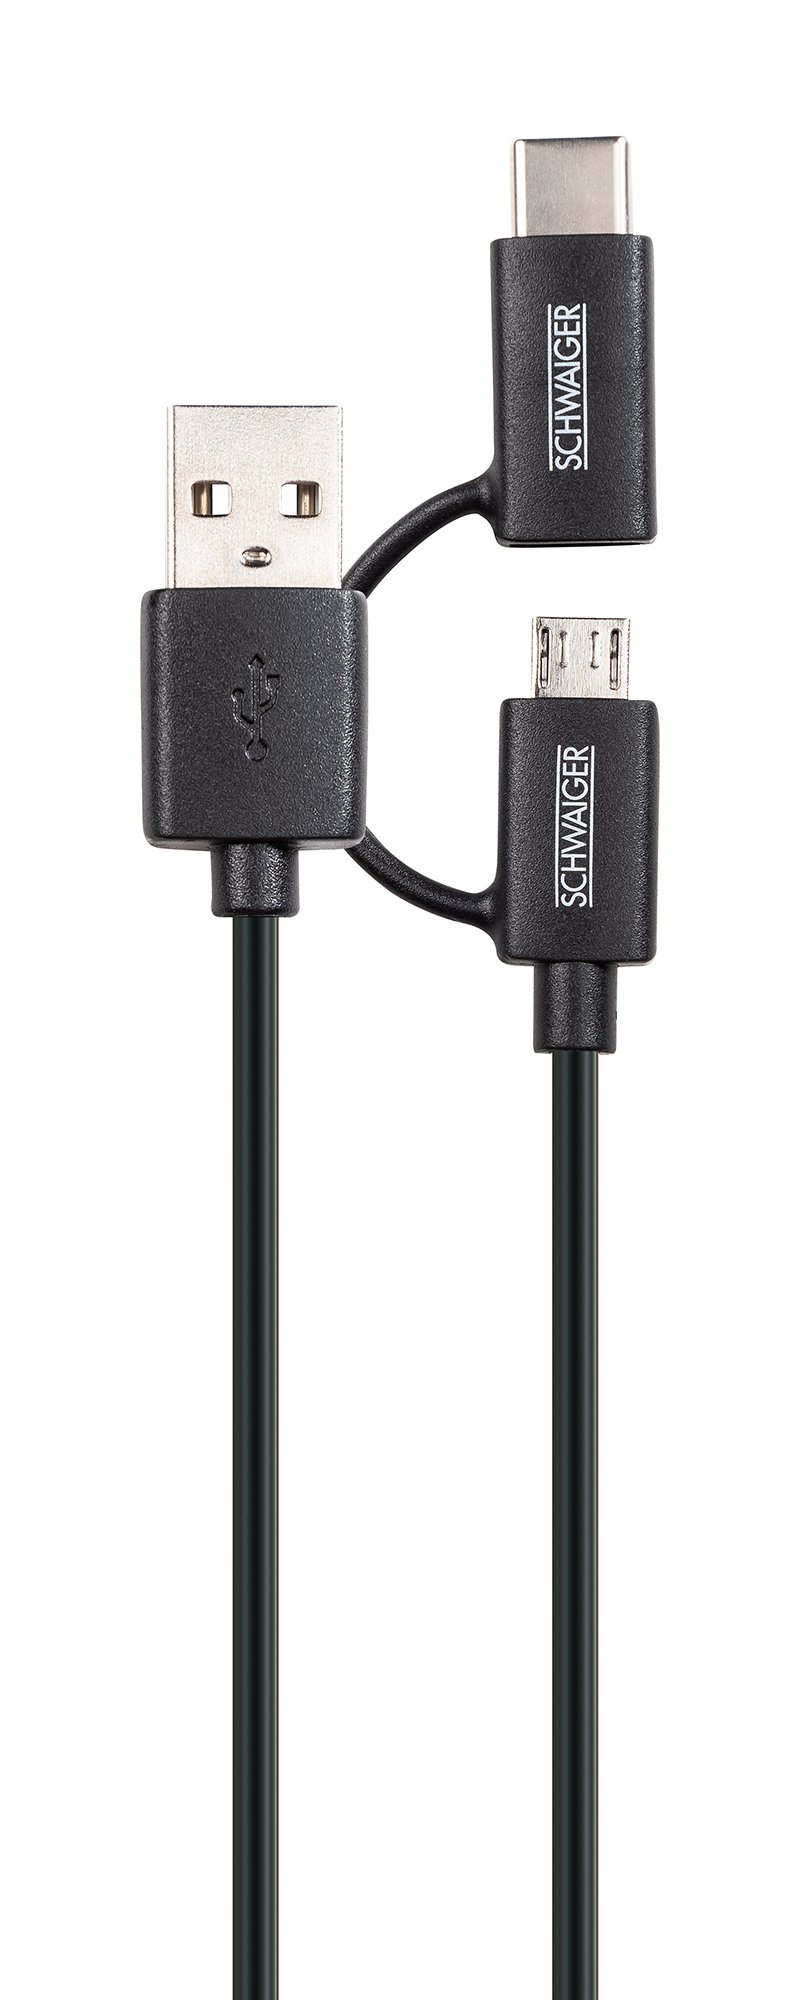 SCHWAIGER USB 3.1 Adapterkabel, Schwarz CK3112533